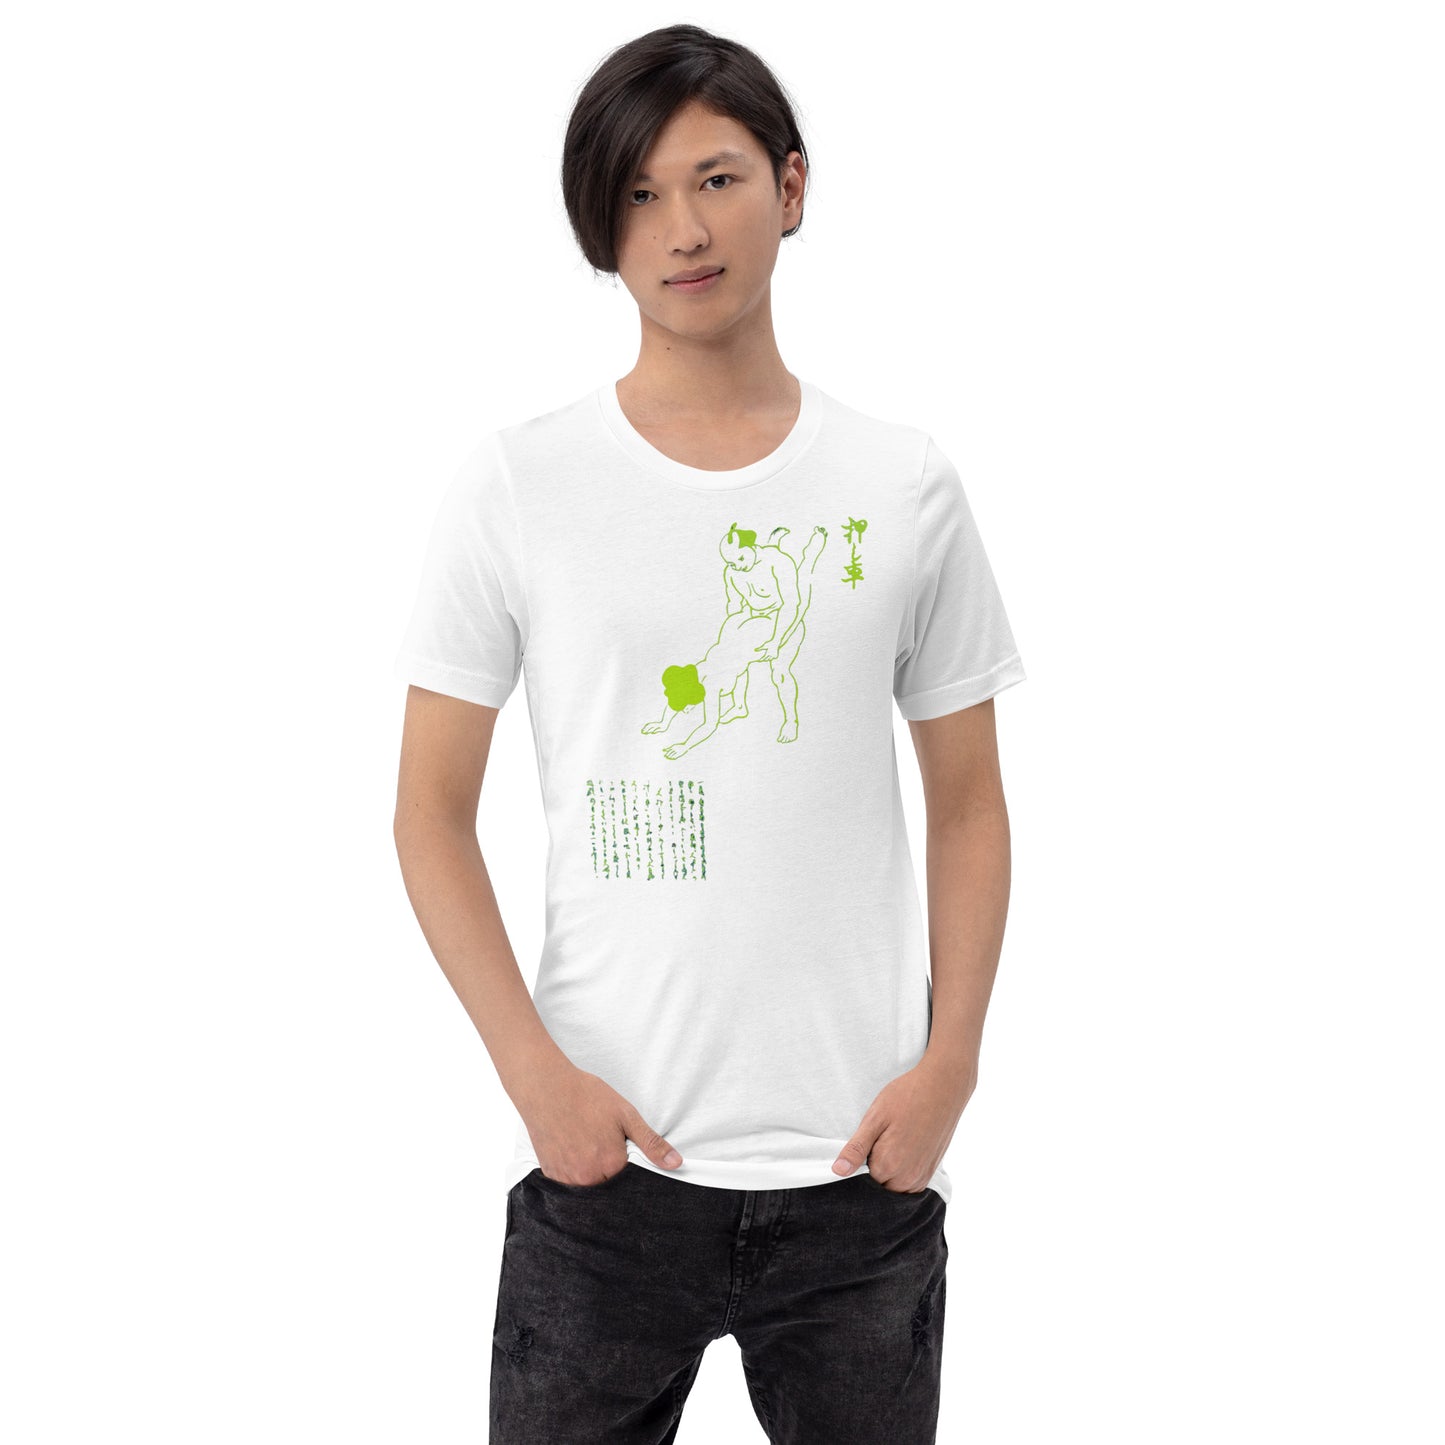 Unisex t-shirt "40 OSHI GURUMA" White